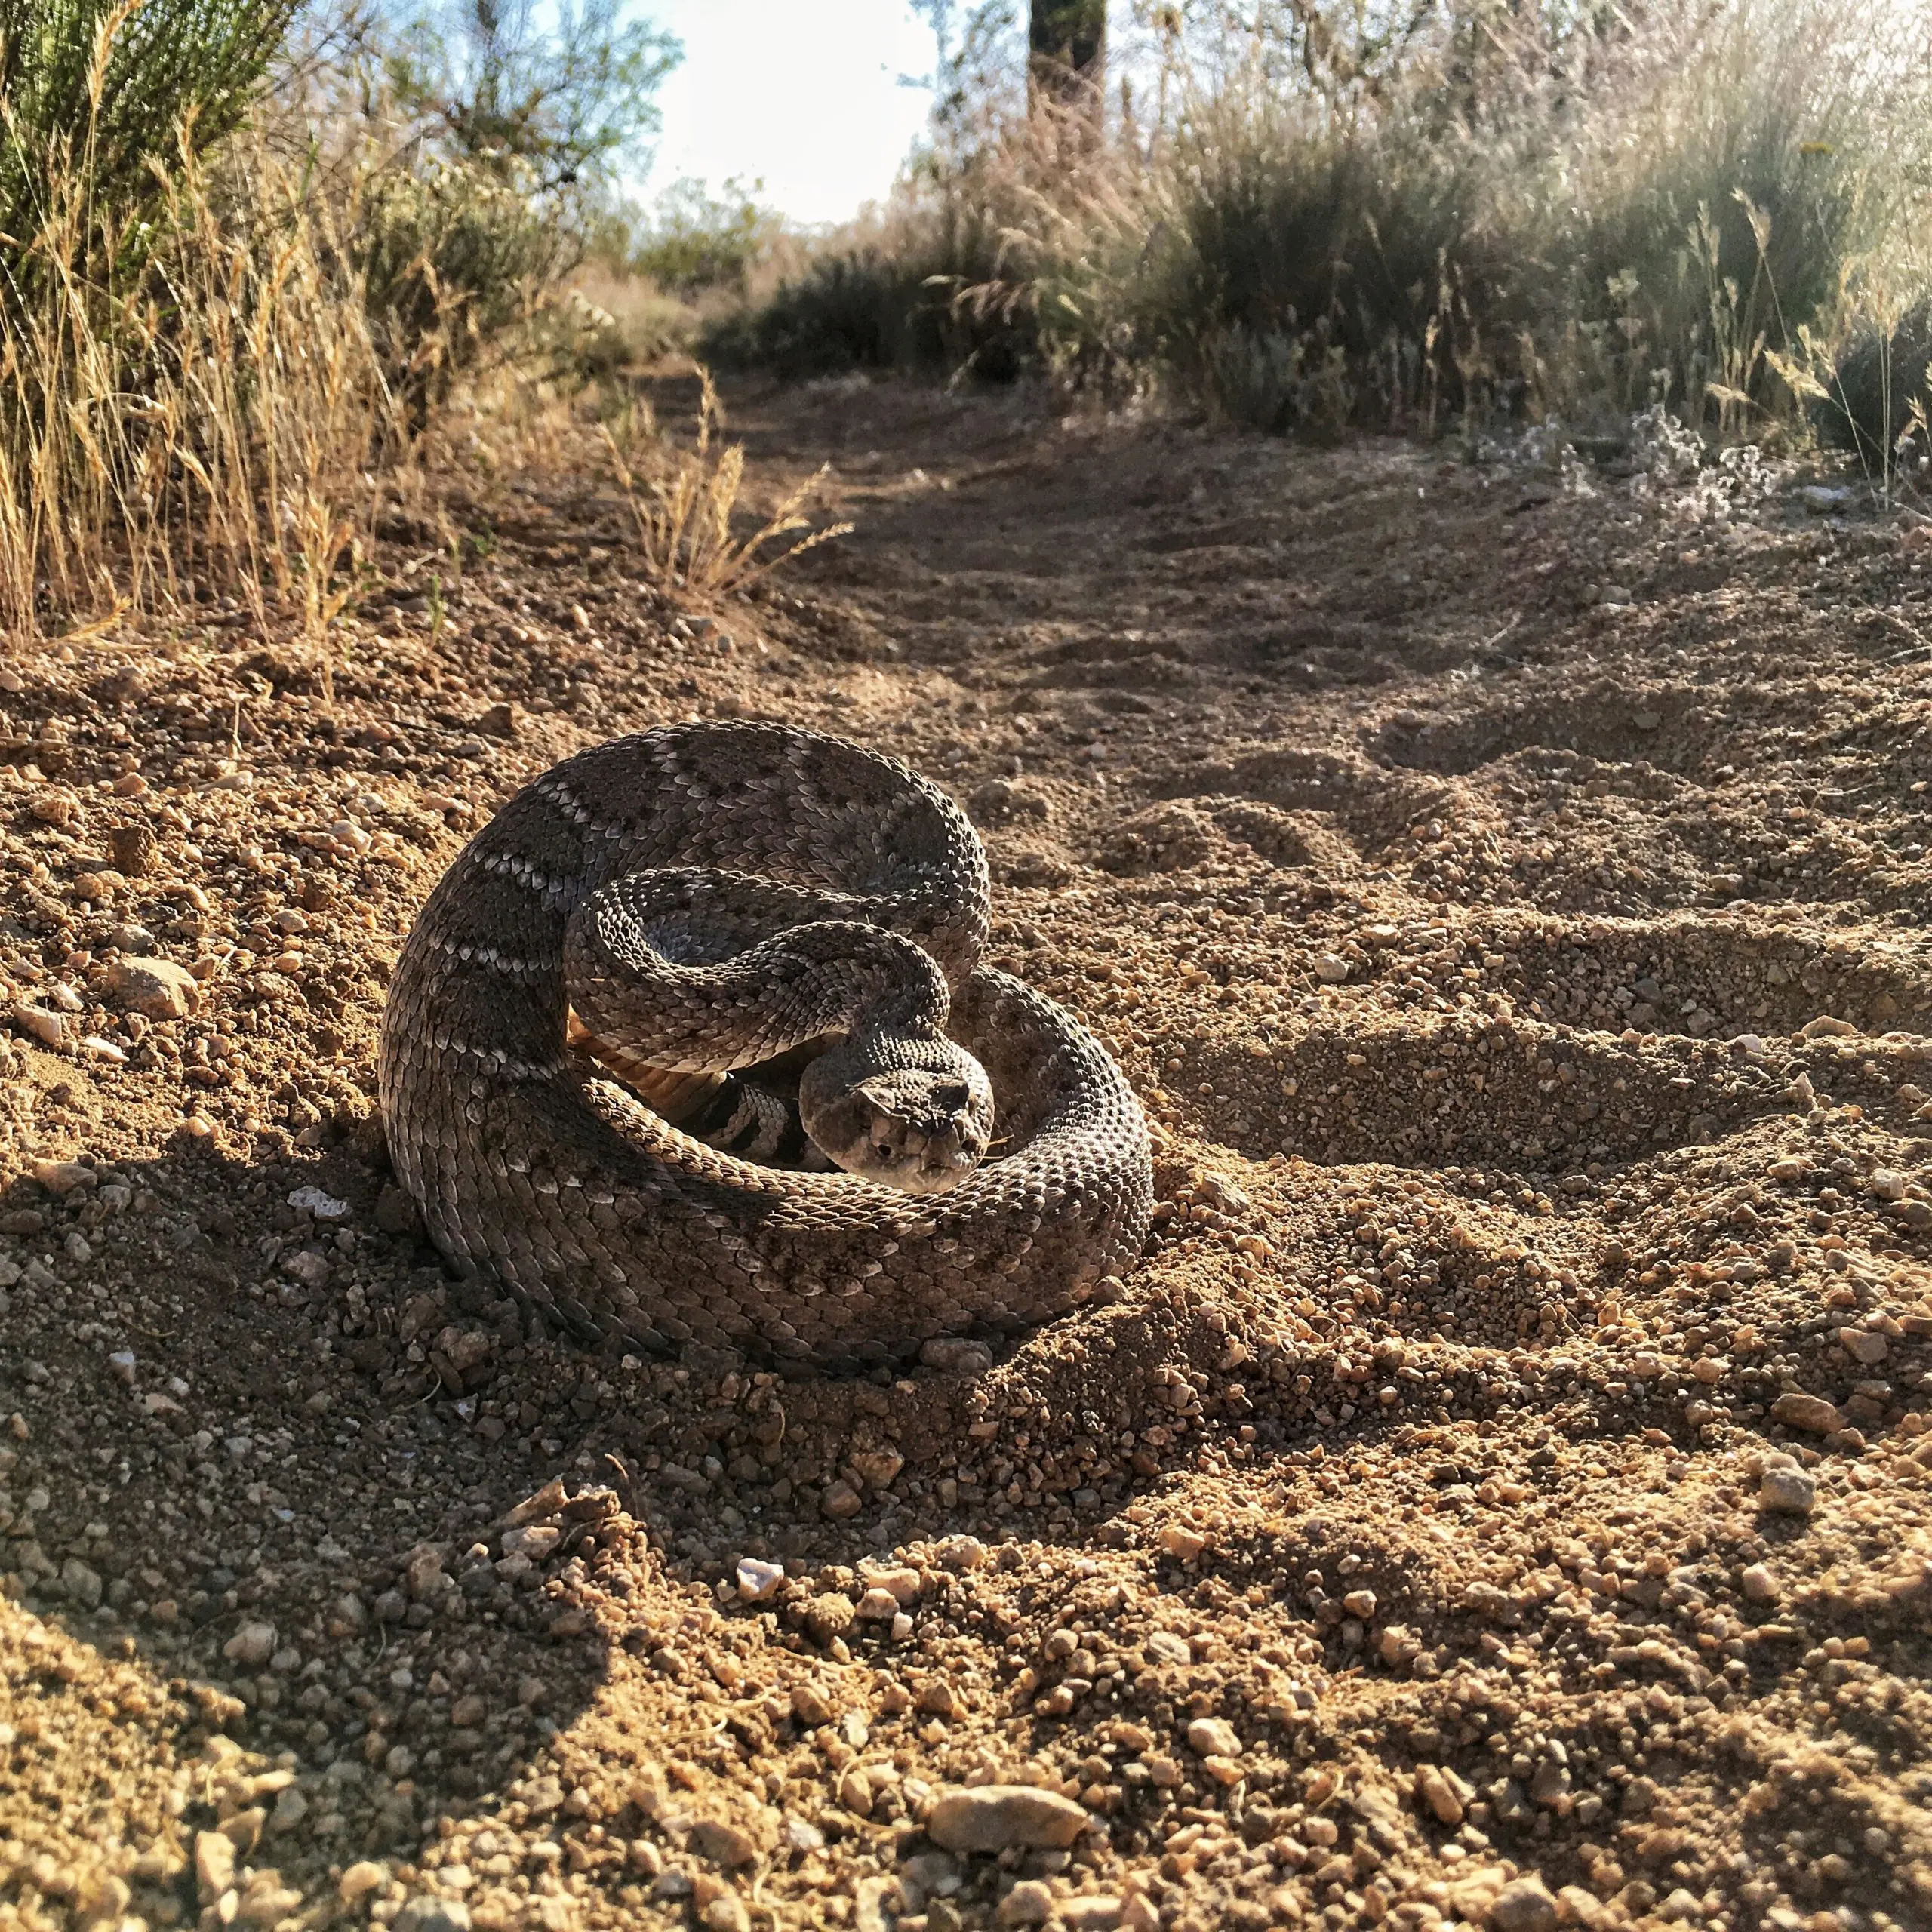 Western Diamondback Rattlesnake | Corey Keppel